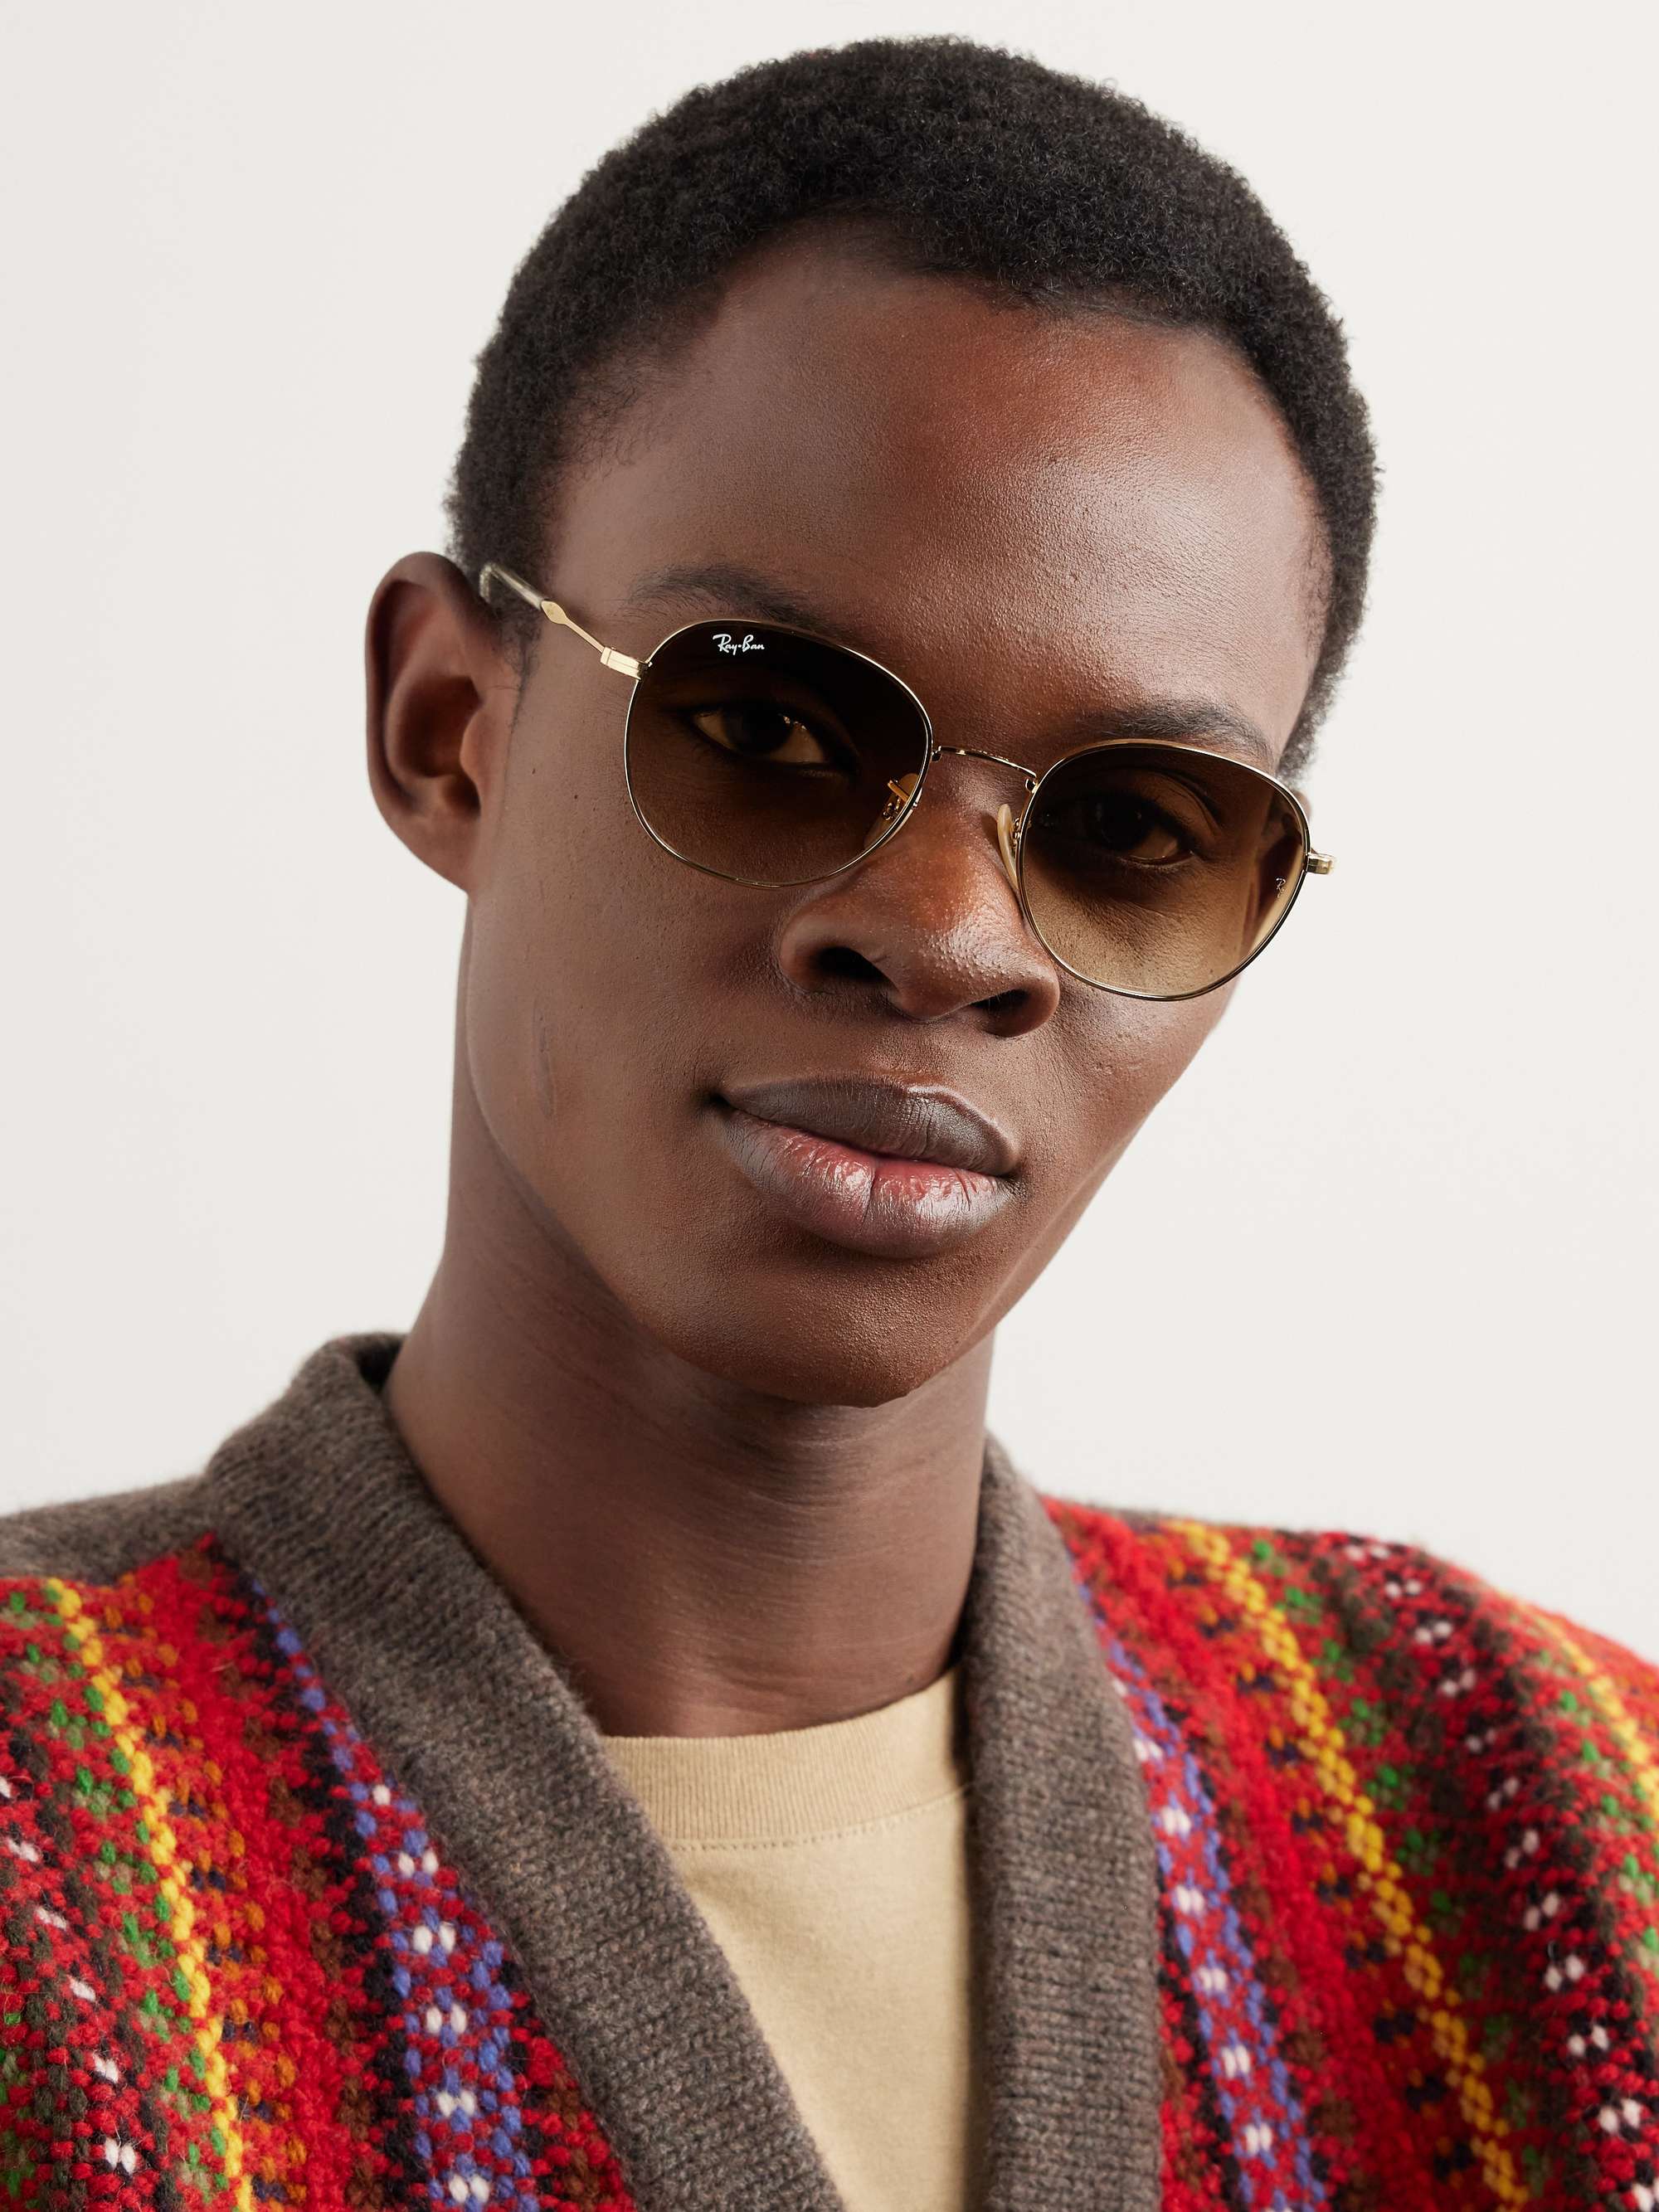 RAY-BAN Round-Frame Gold-Tone Sunglasses for Men | MR PORTER